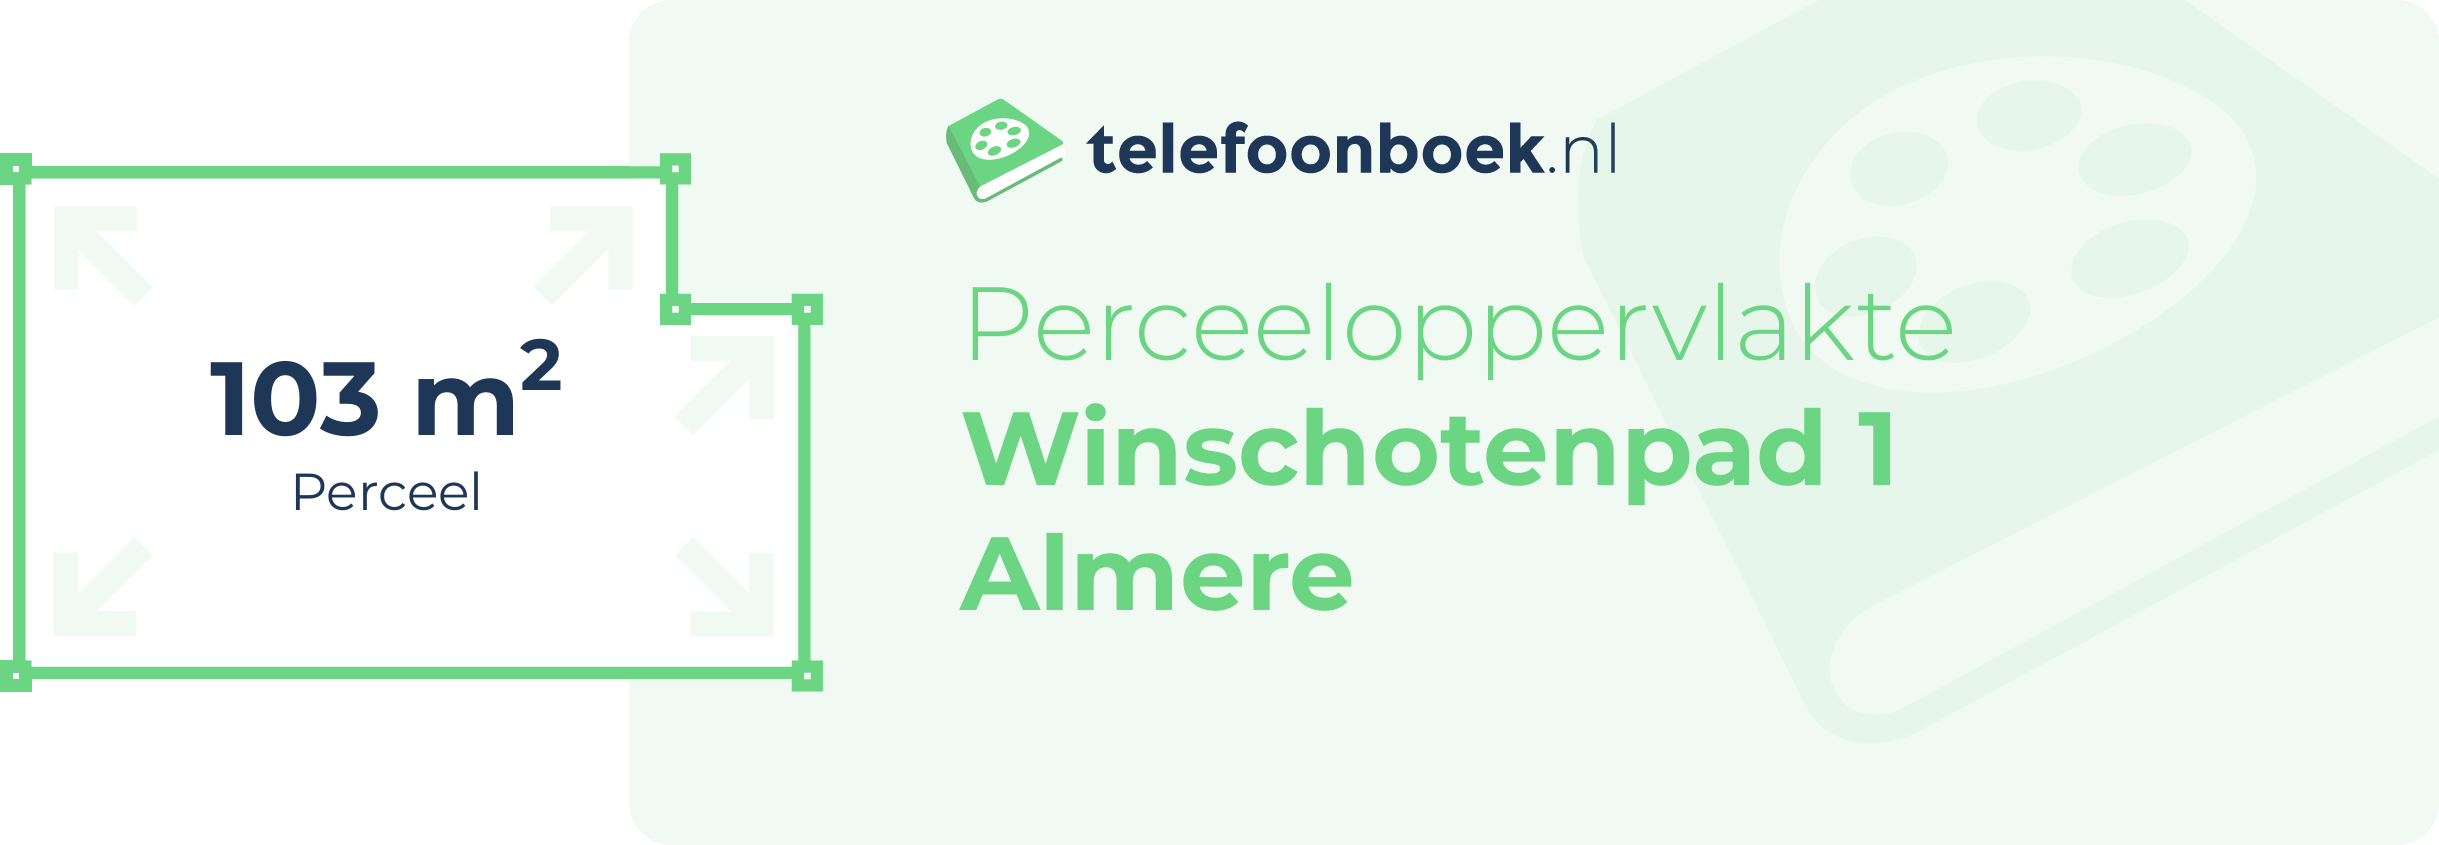 Perceeloppervlakte Winschotenpad 1 Almere